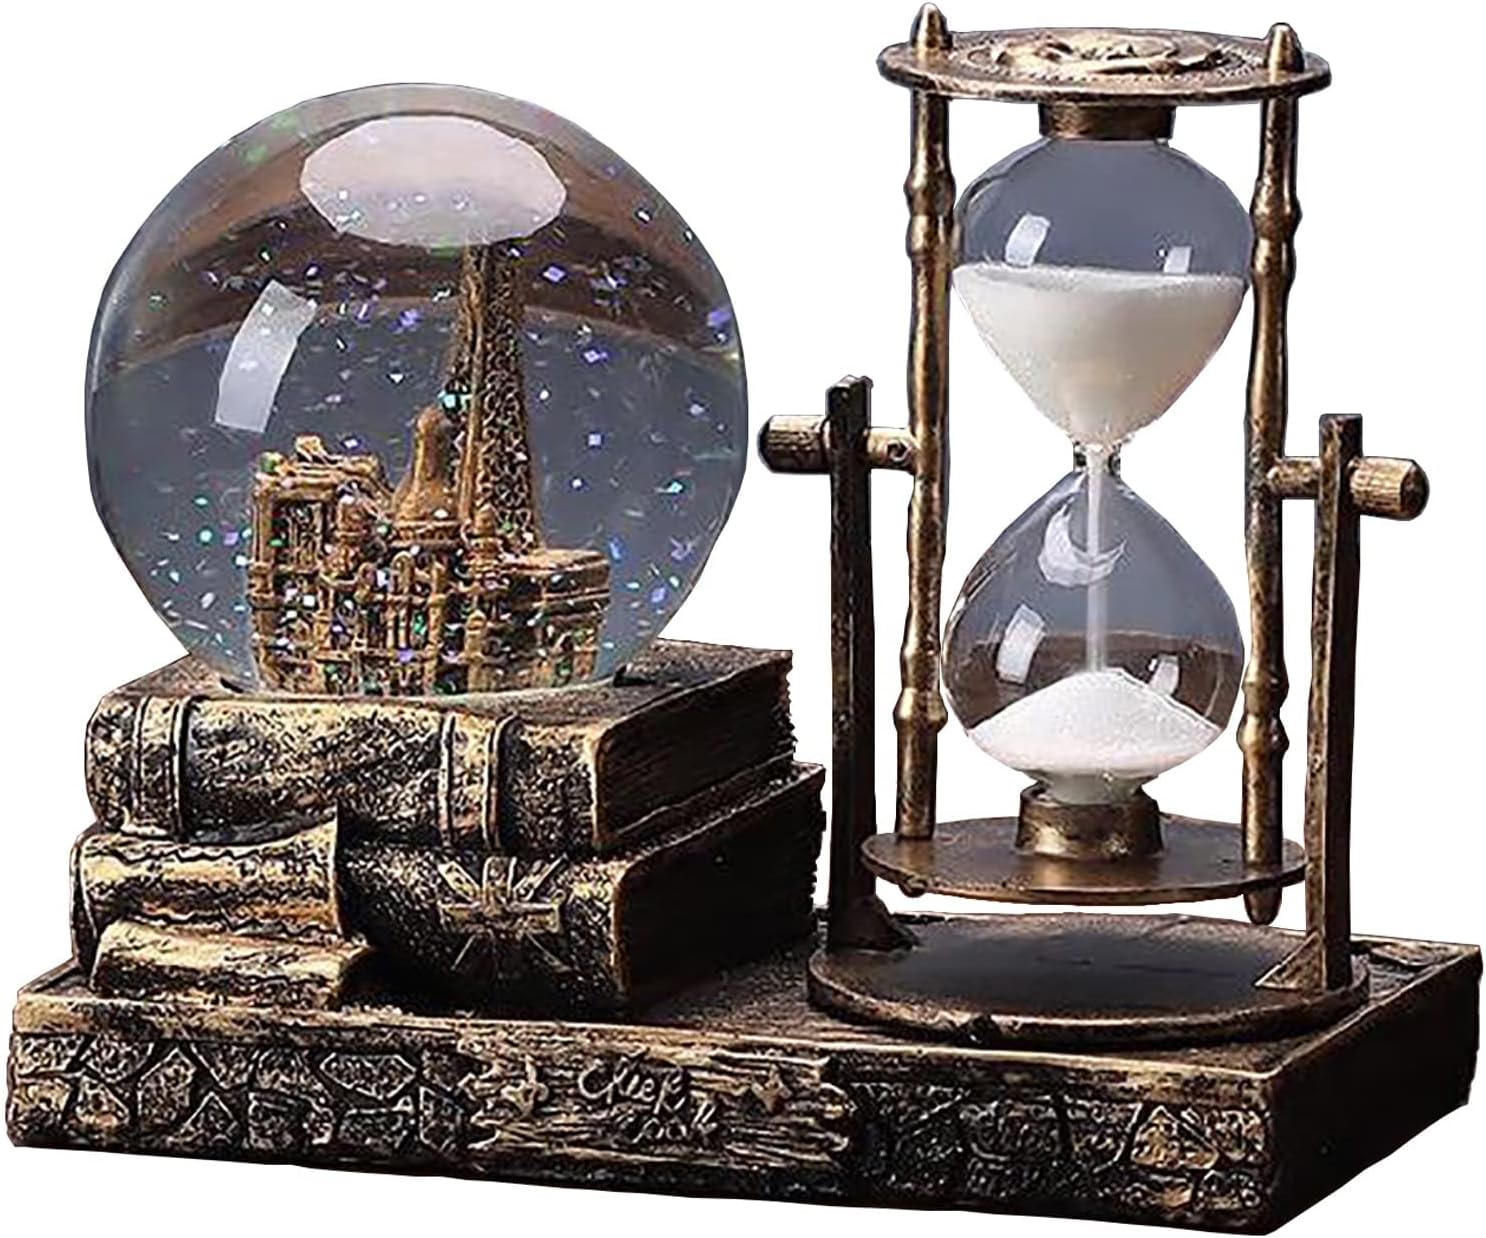 Crystal Snow Globe With Sand Clock - Eiffel Tower - Astronaut - Home Decoration - Desktop Decor Table Centerpieces Ornaments